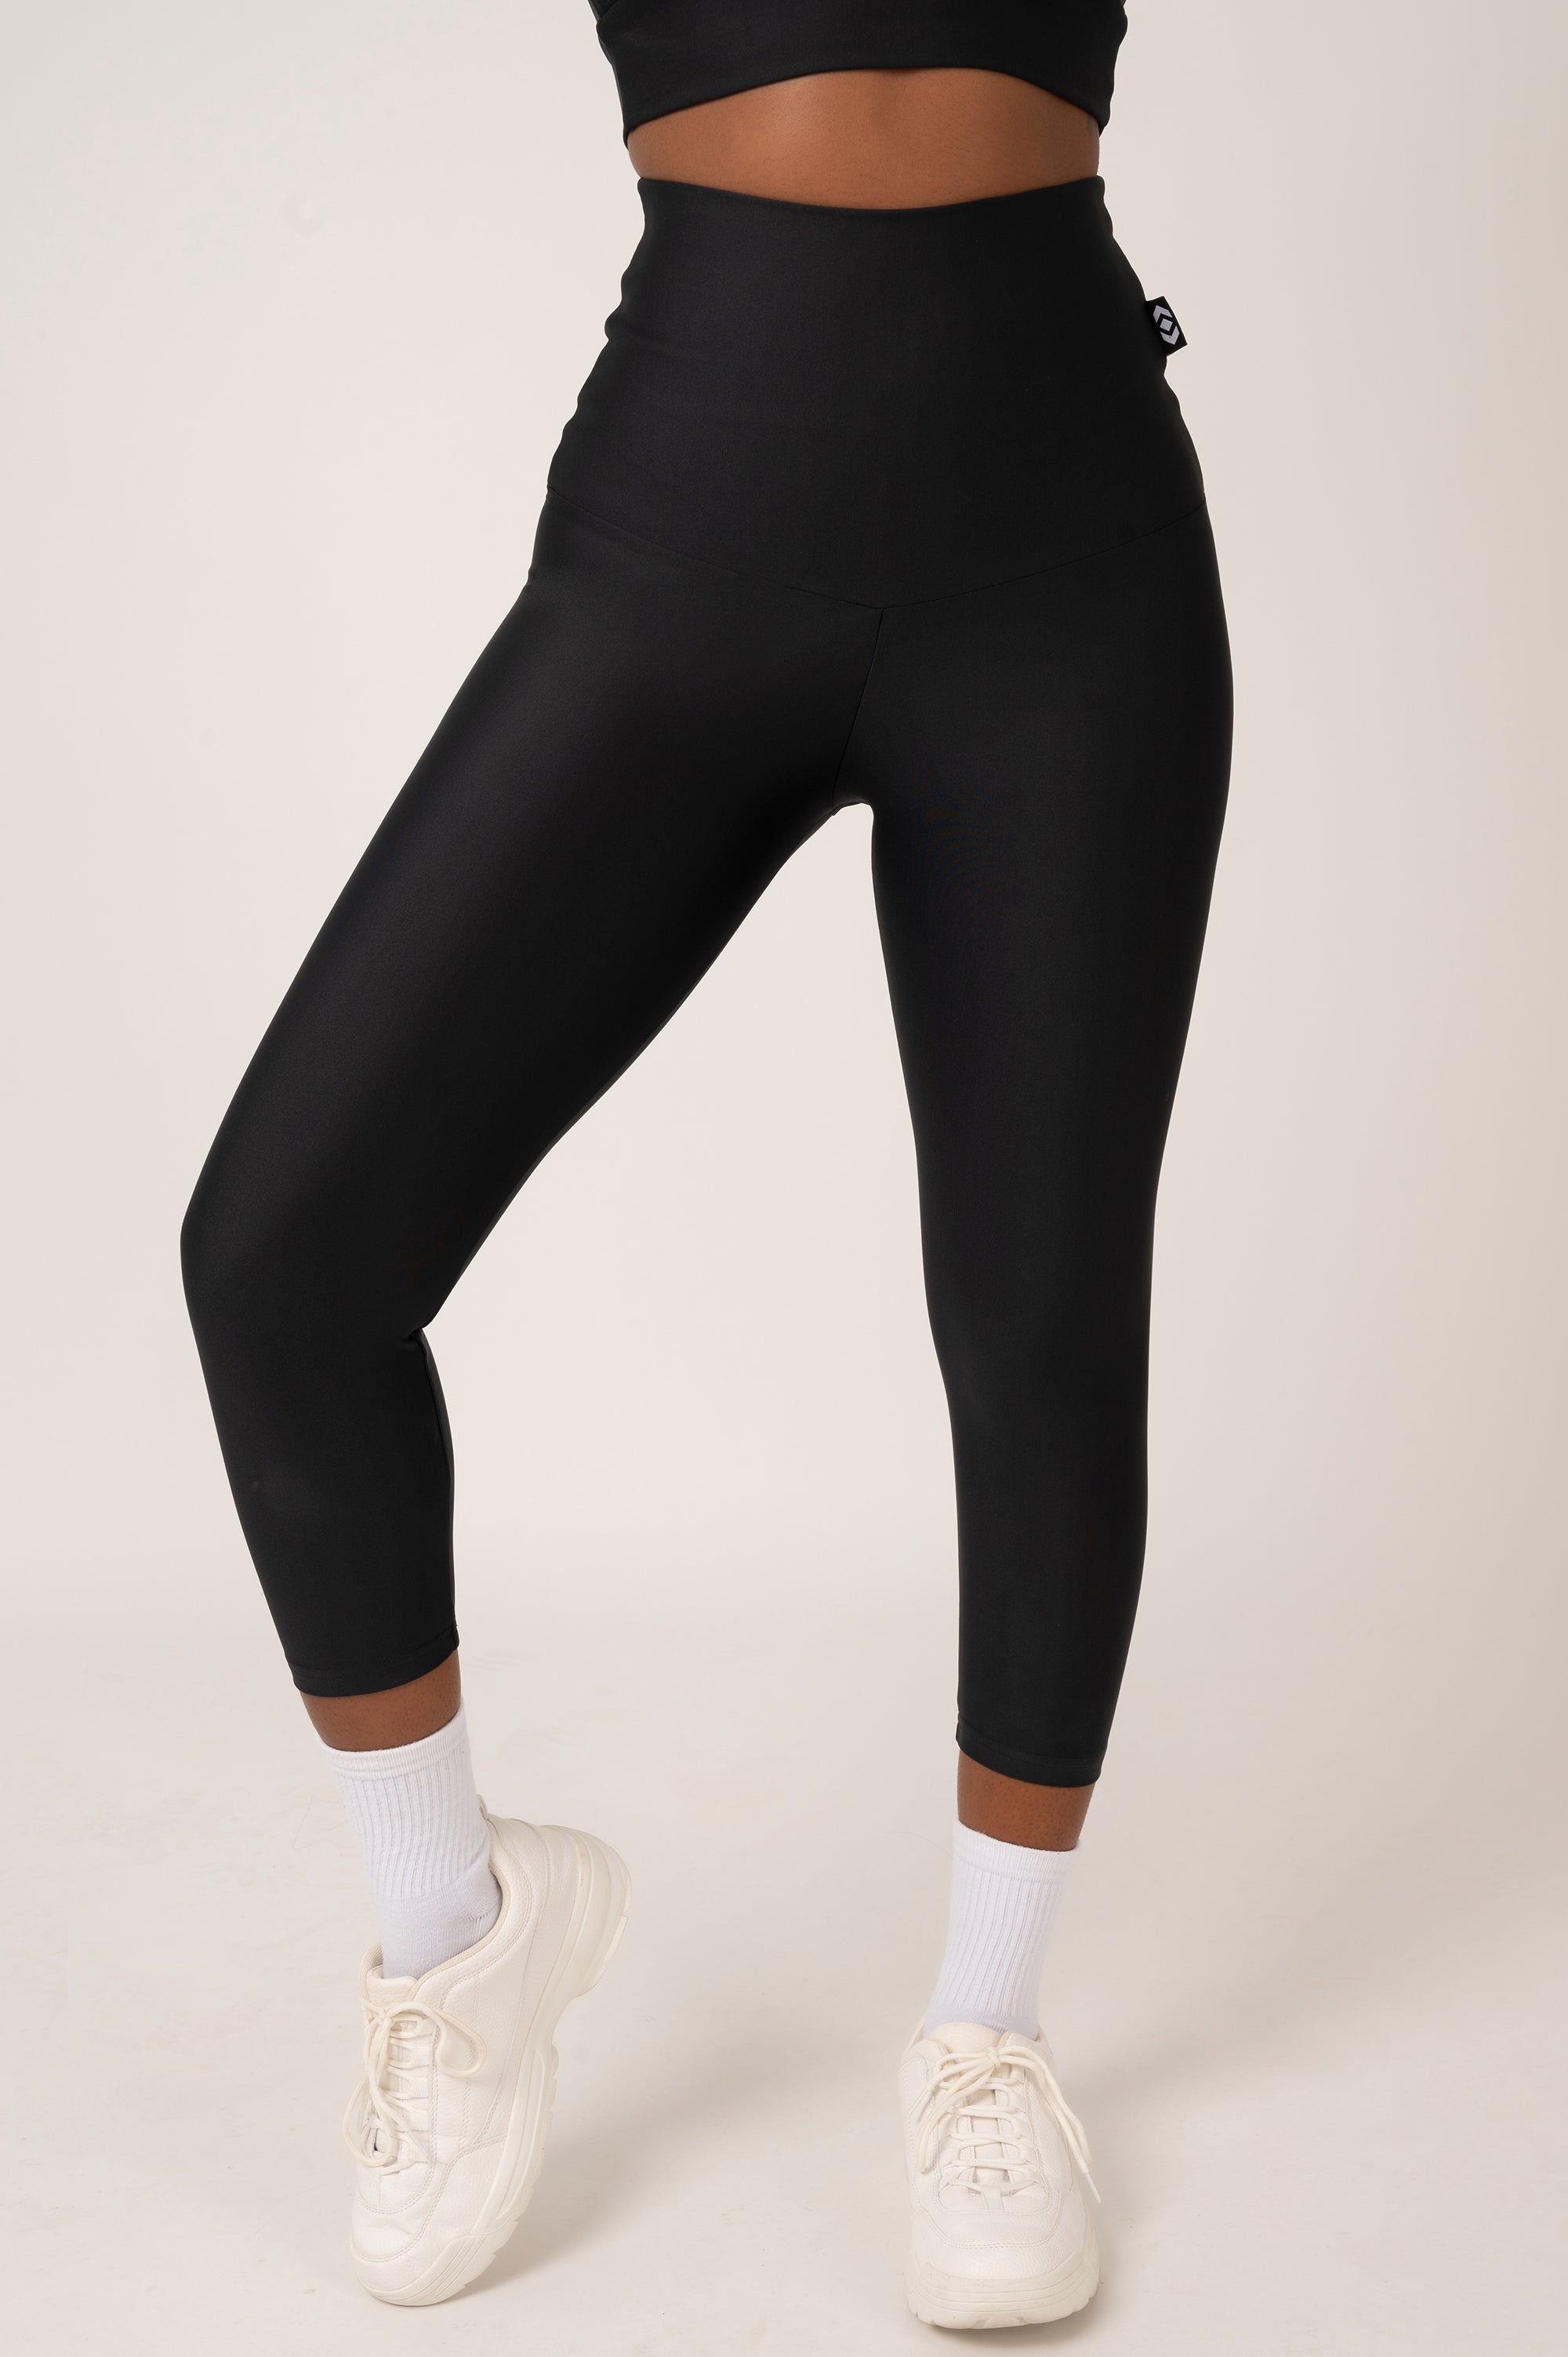 Buy Black Leggings for Women by Puma Online | Ajio.com